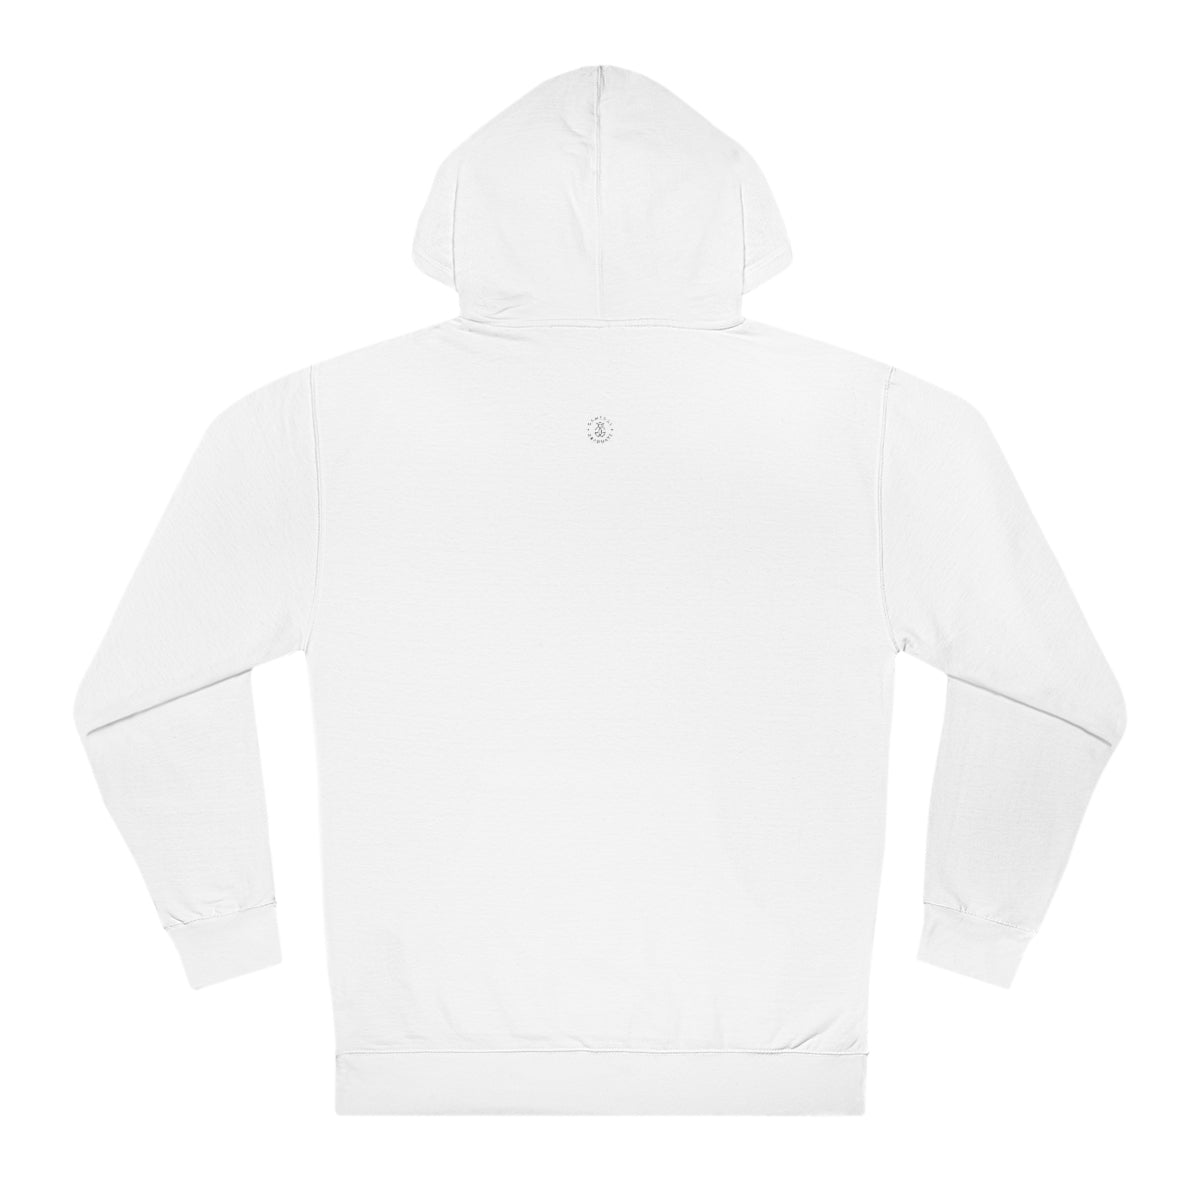 Smiley Manhattan Hooded Sweatshirt - GG - ITC